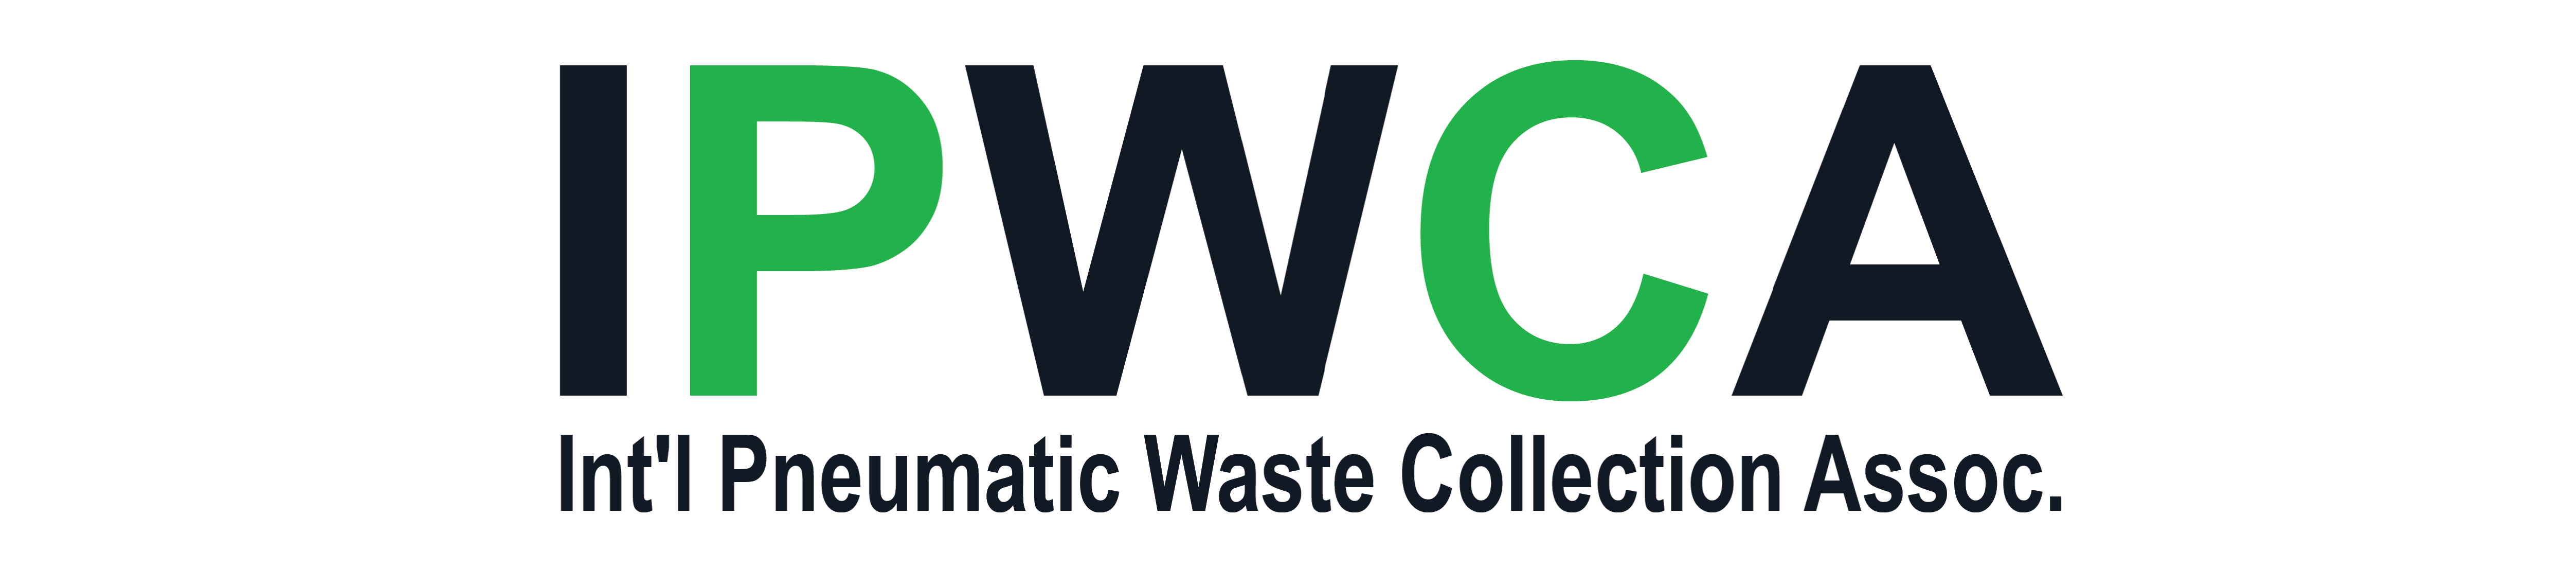 International Pneumatic Waste Collection Association – IPWCA